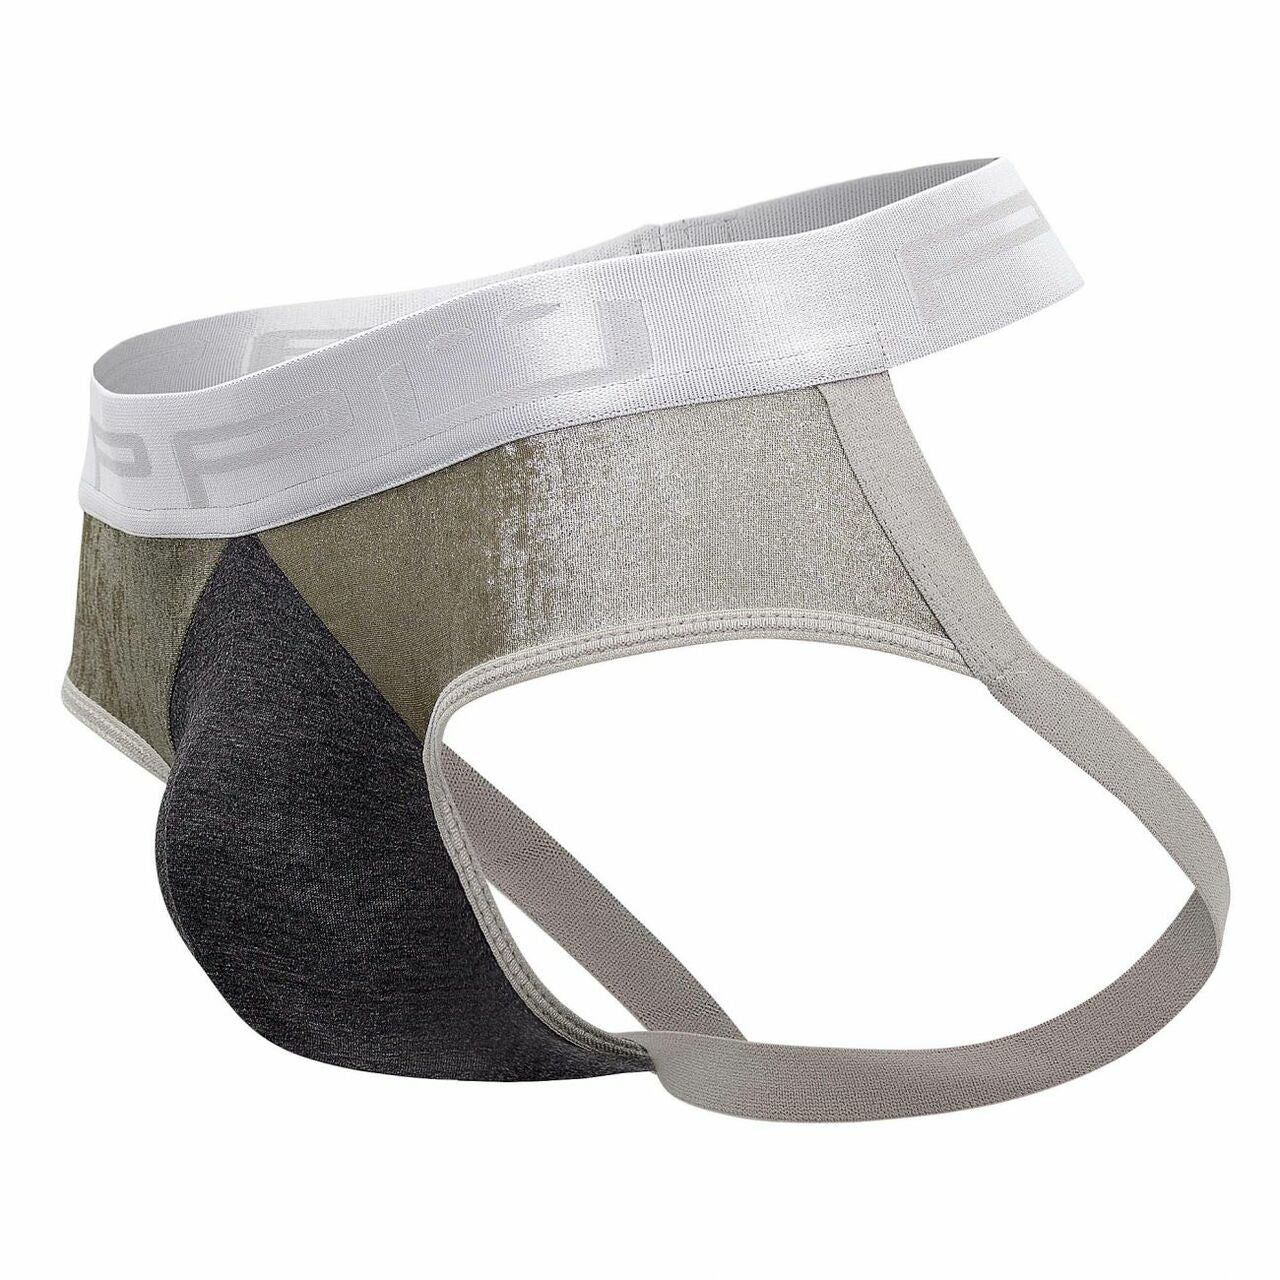 SALE - Mens PPU Underwear Jockstrap Brief Black with Silver